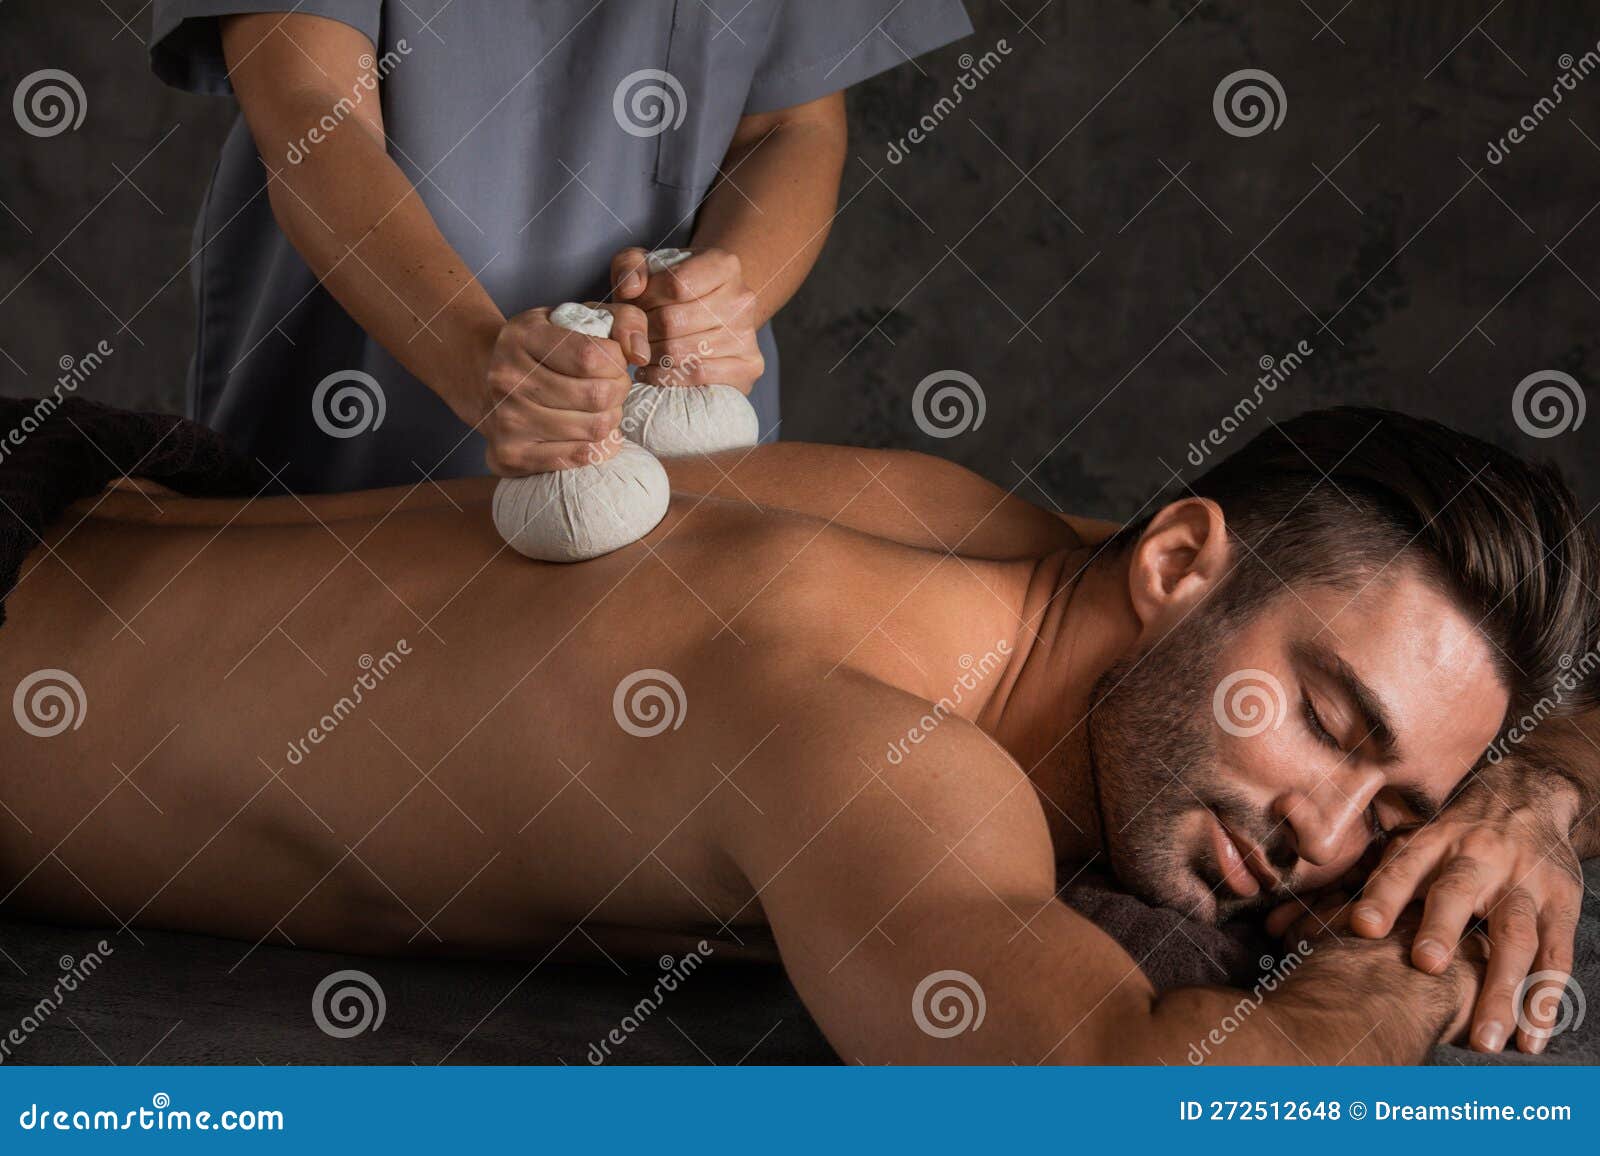 https://thumbs.dreamstime.com/z/young-handsome-men-having-back-massage-pouche-man-having-back-massage-pouche-272512648.jpg